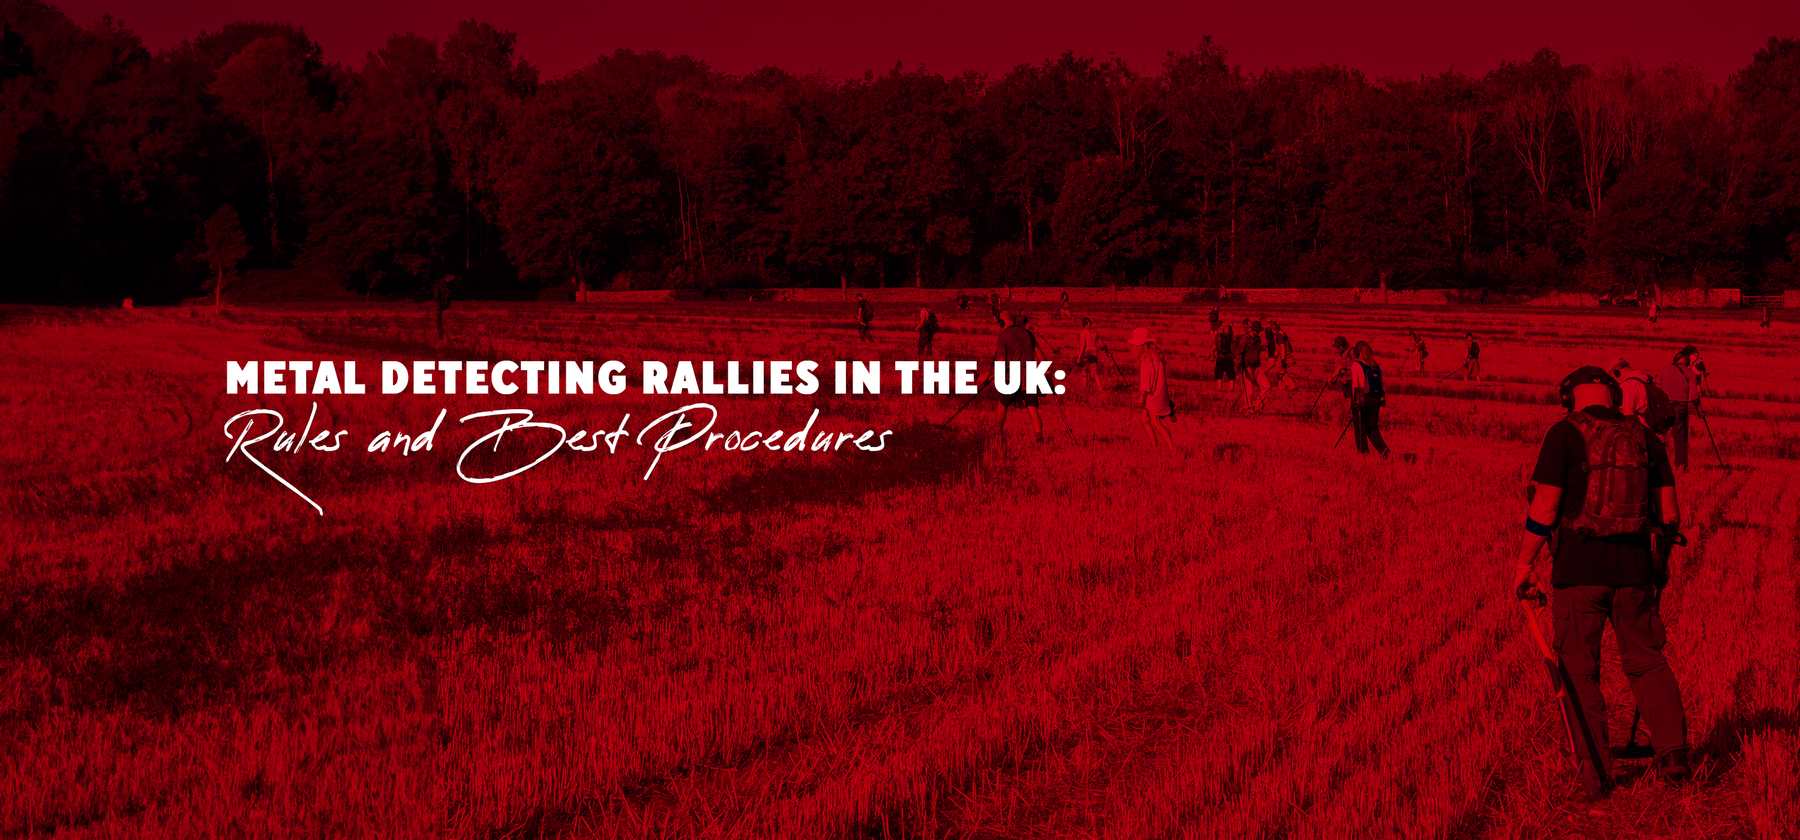 Metal Detecting Rallies in the UK: Rules and Best Procedures